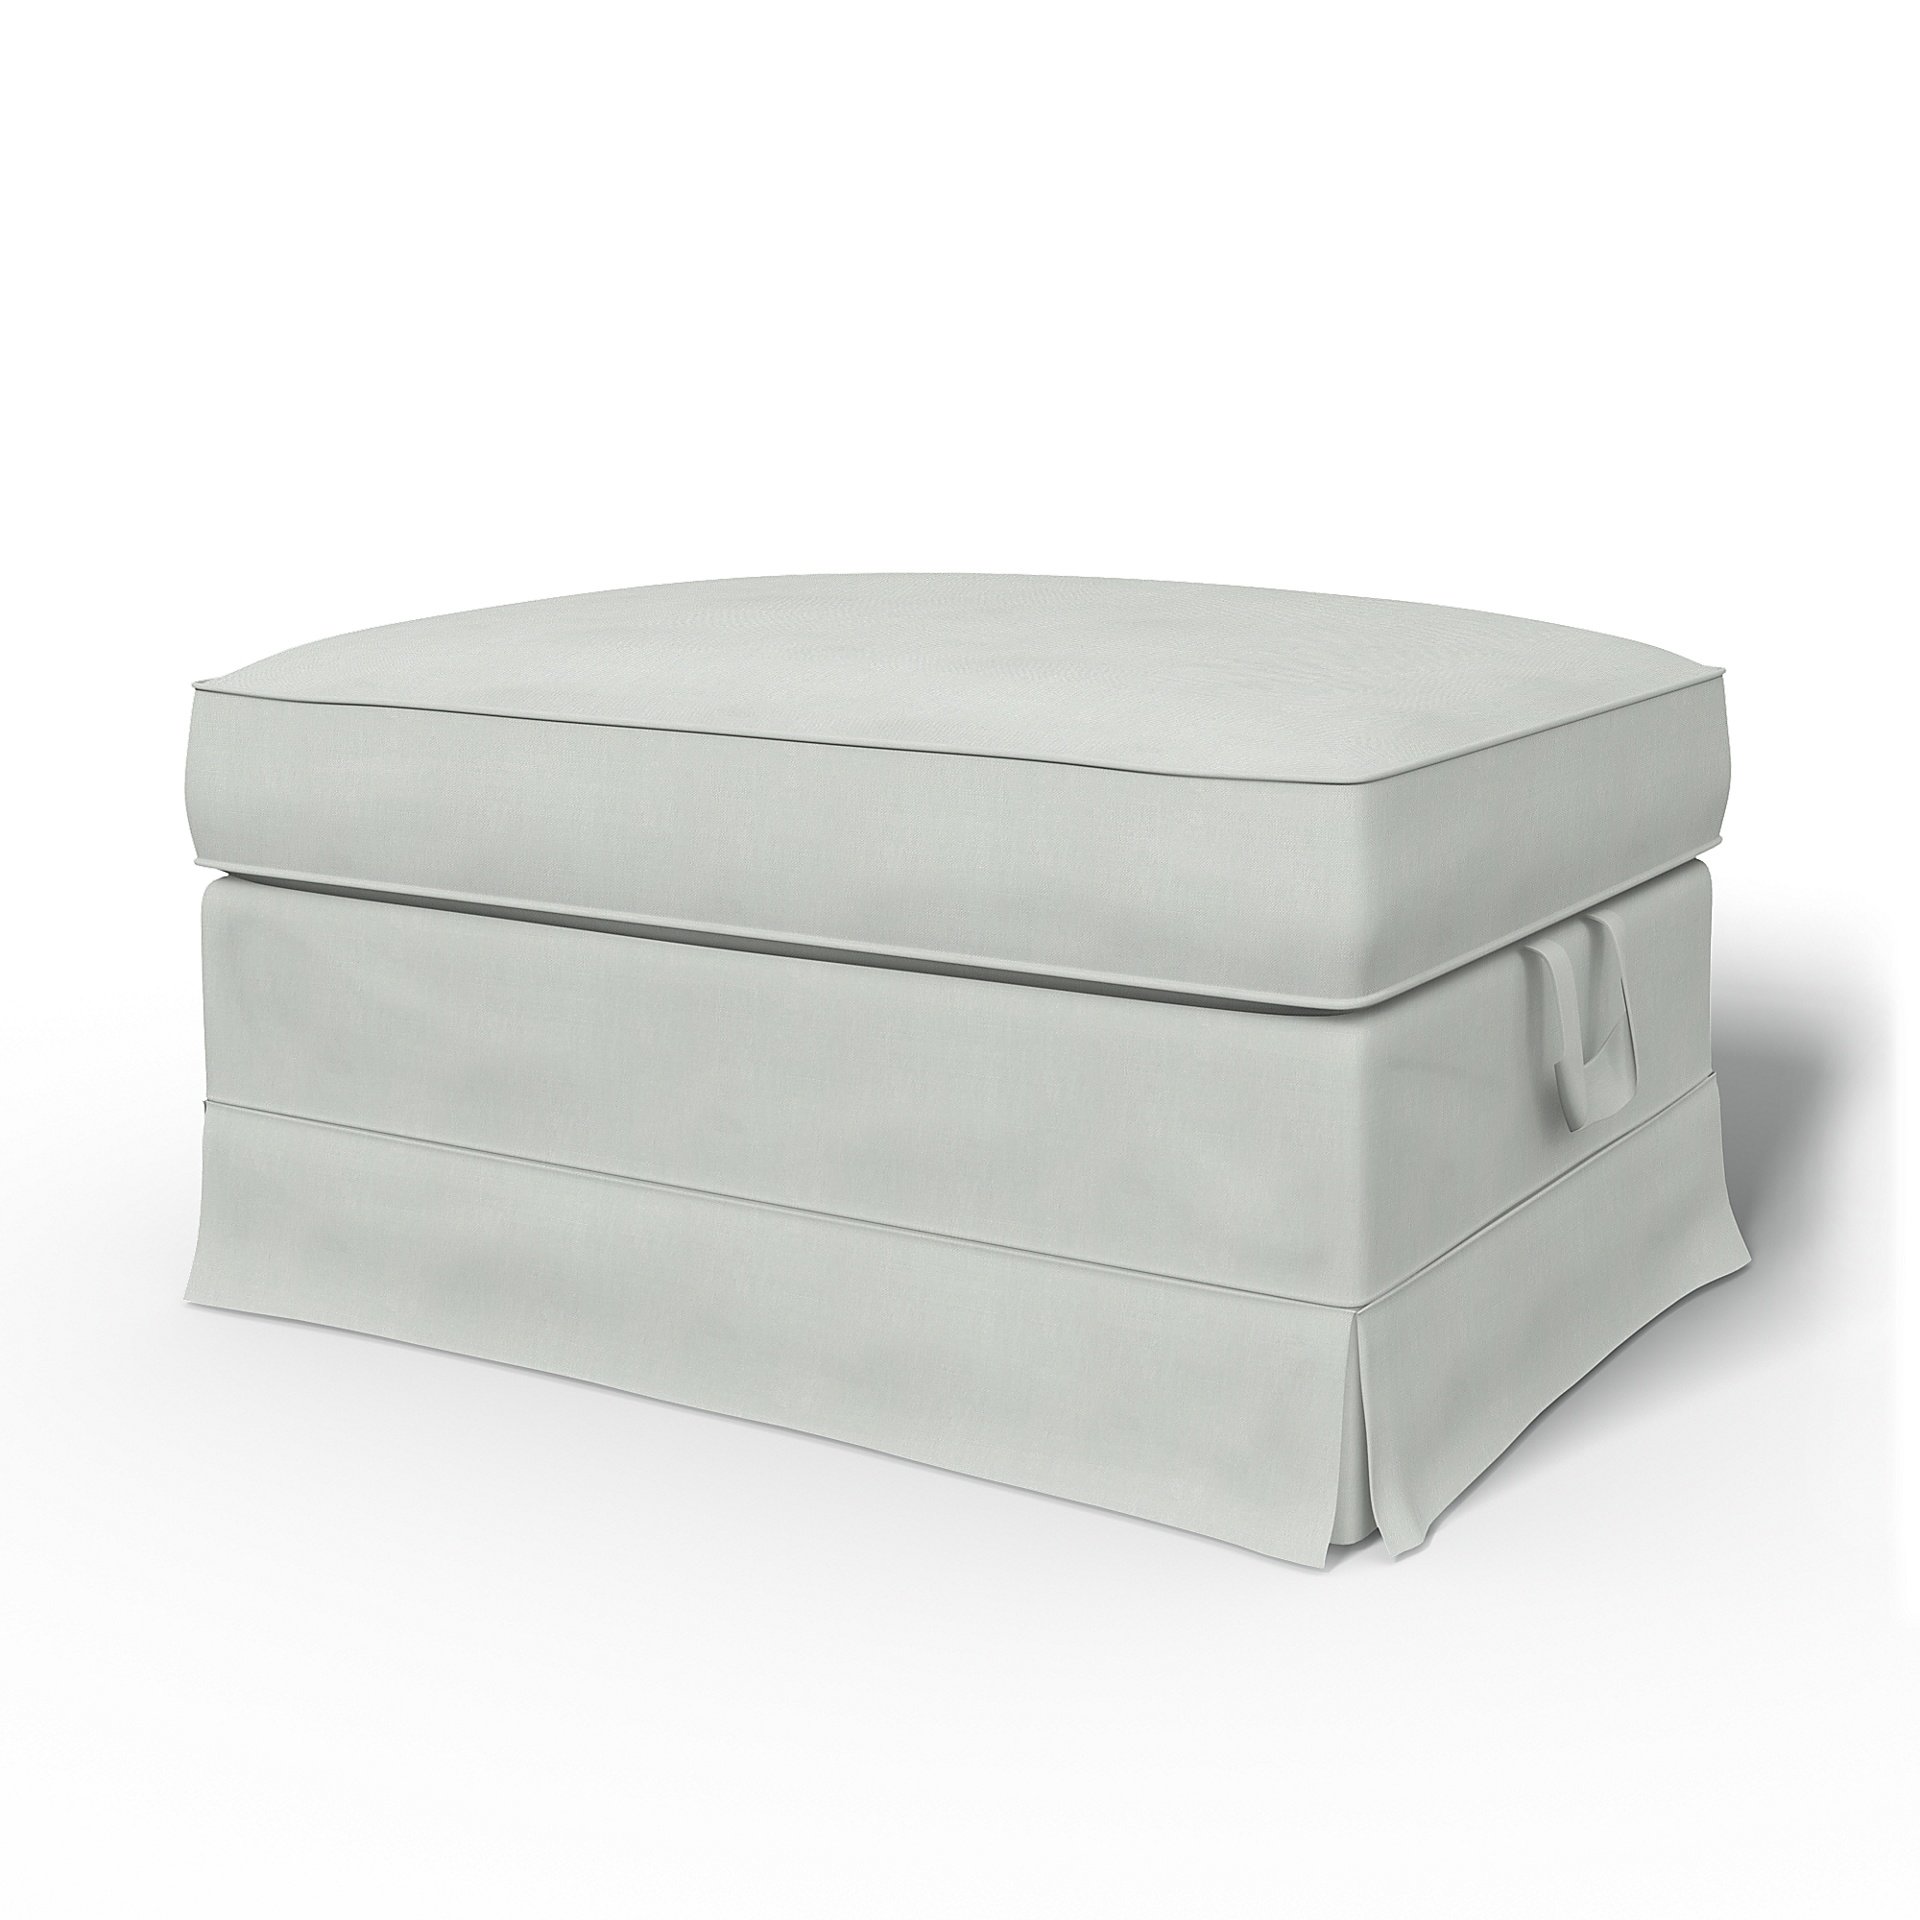 IKEA - Ektorp Footstool Cover, Silver Grey, Linen - Bemz